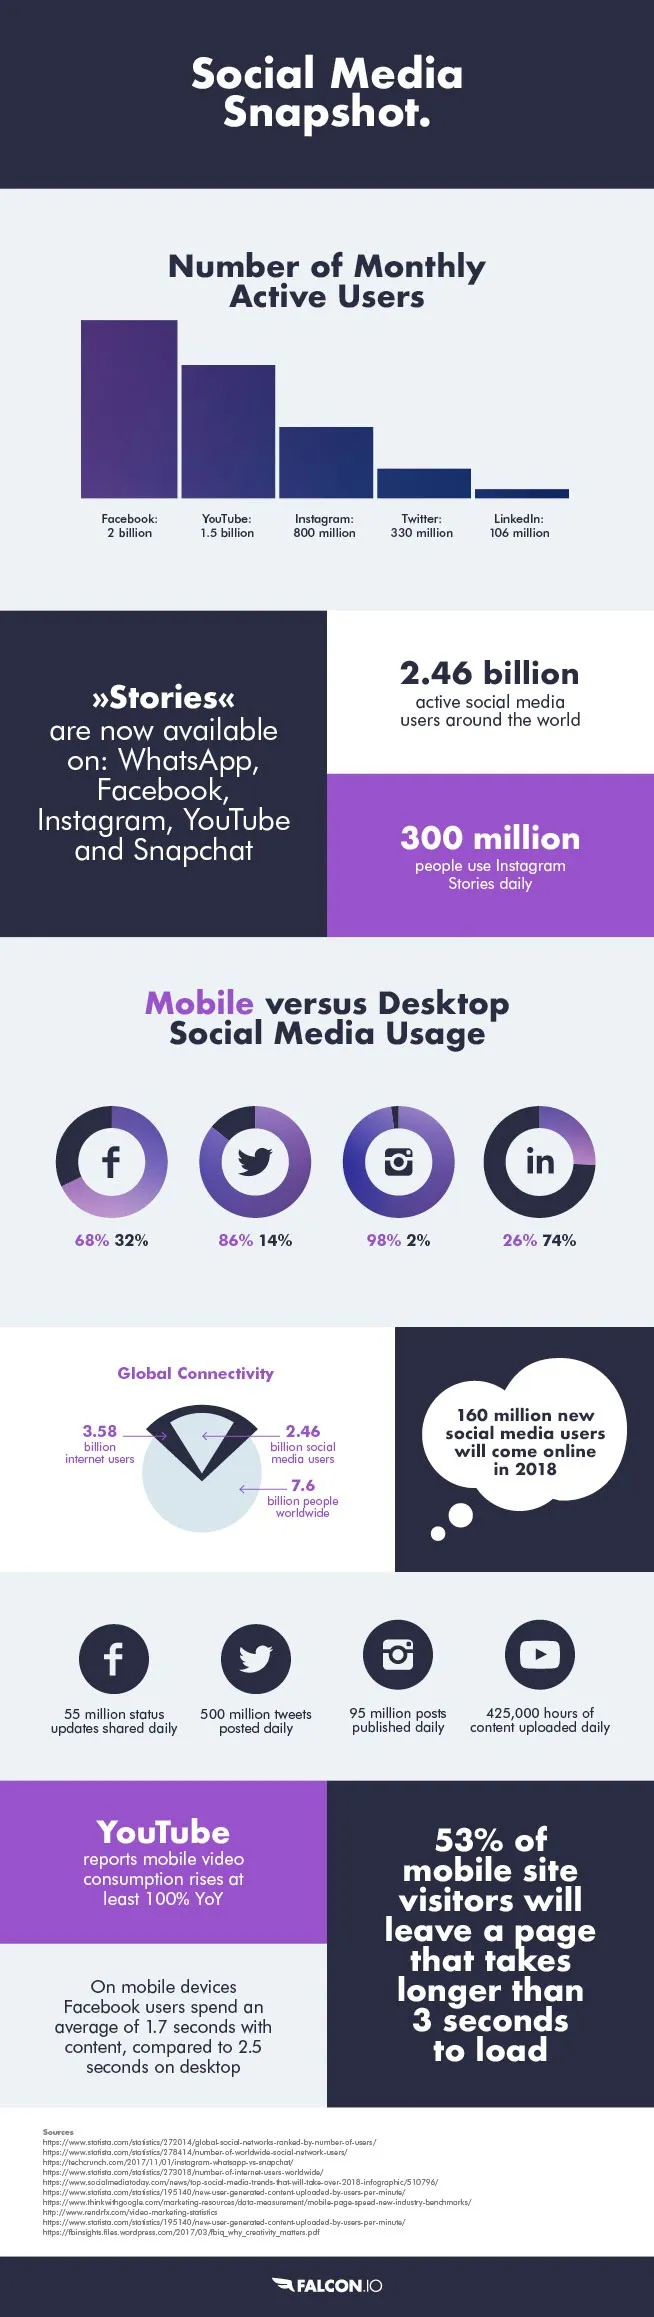 2018 Social Media Snapshot - #infographic